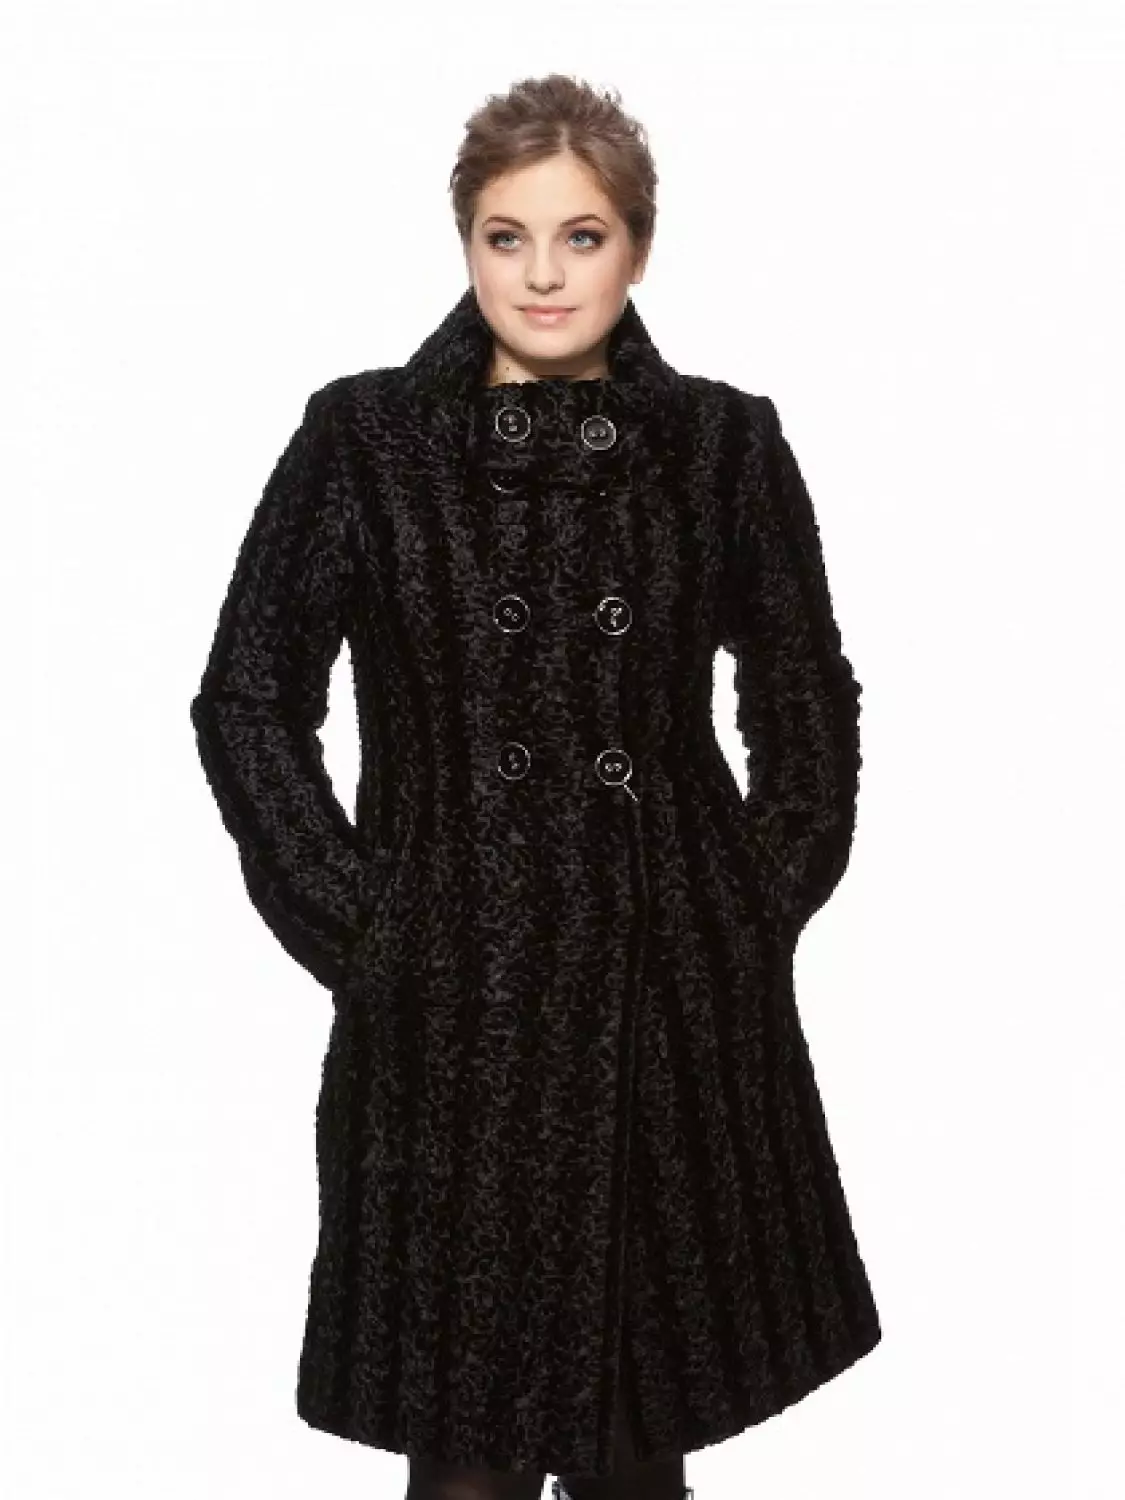 Пальто зі штучного хутра (78 фото): з каракулю, з капюшоном, плюшеве, жіночі моделі пальто 621_30